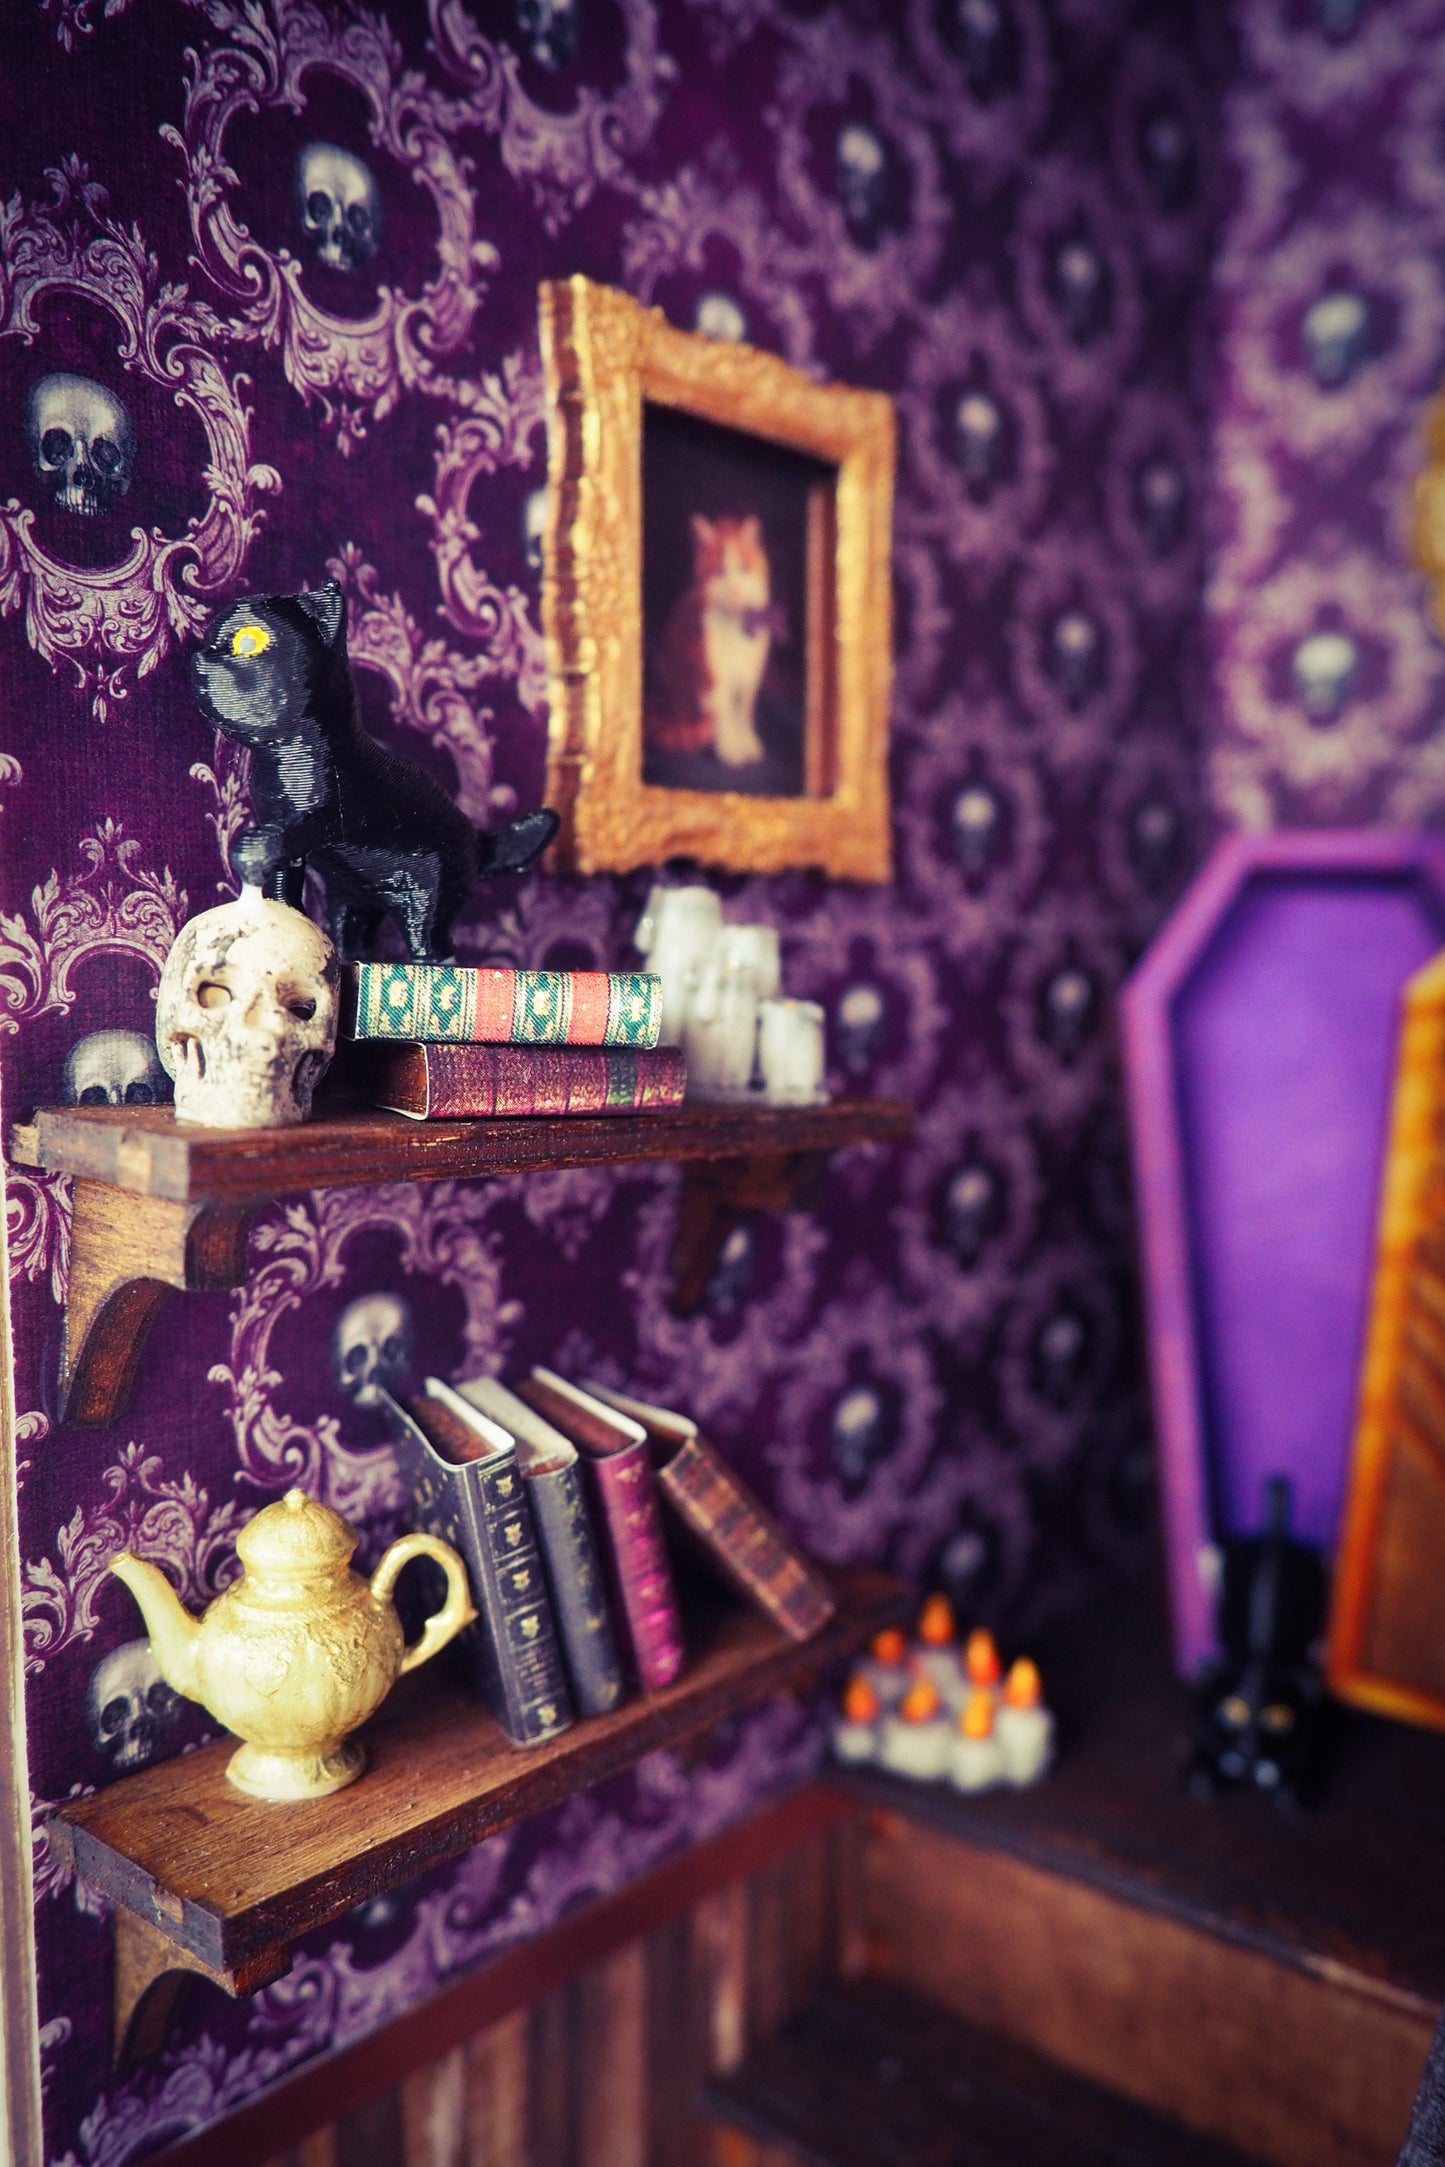 Vampires love cats diorama roombox